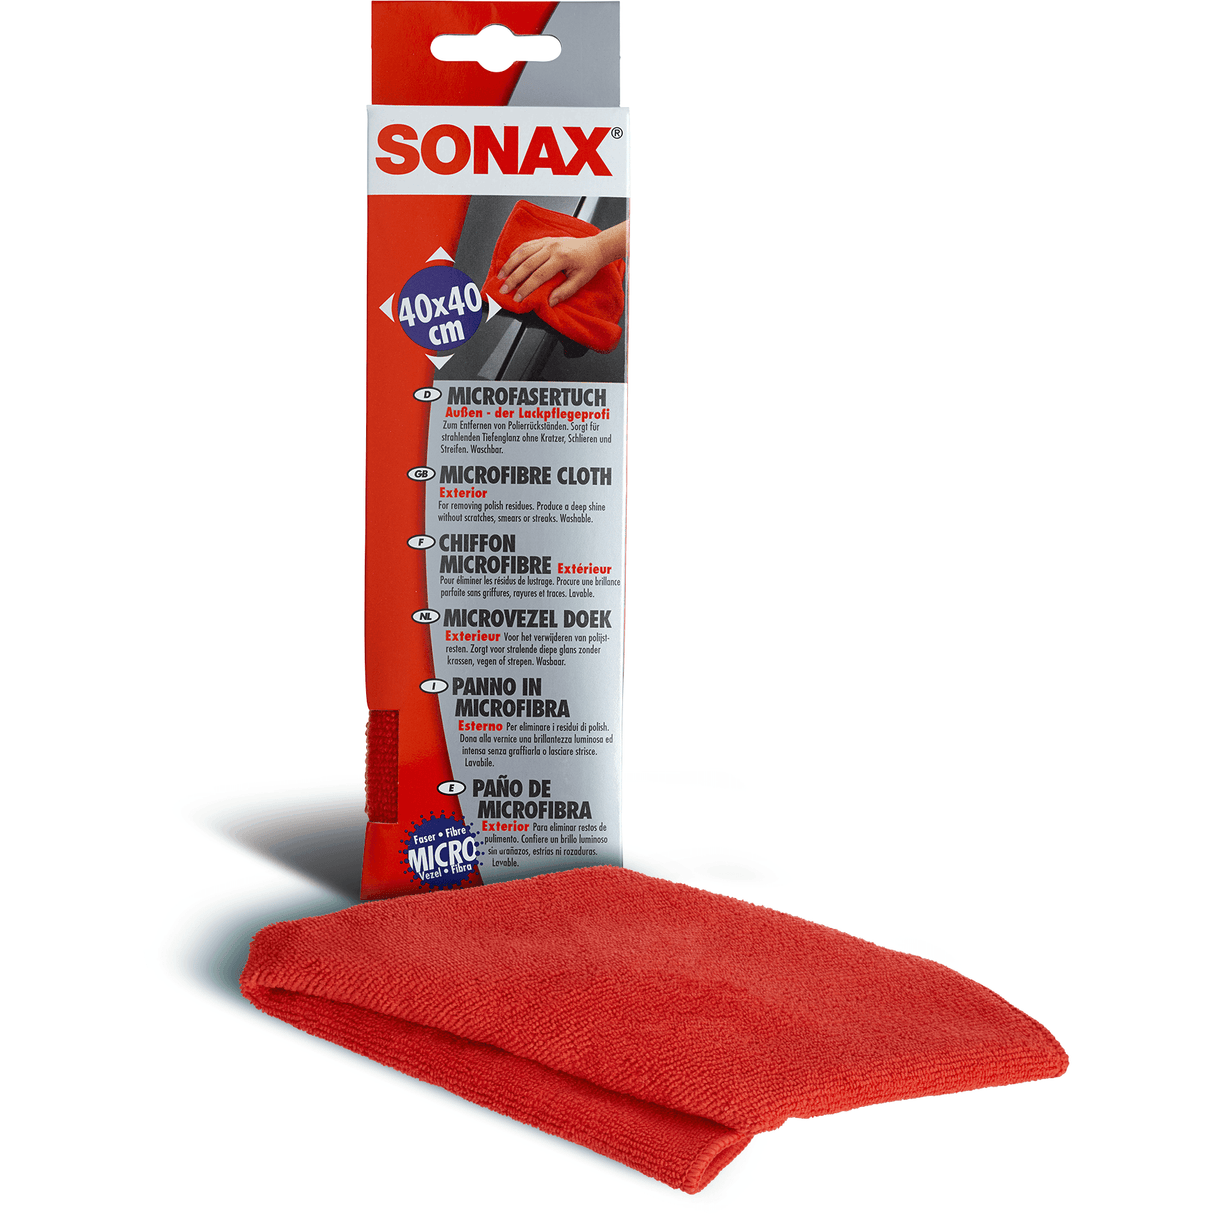 SONAX Microfiberklud Exteriør - Xpert Cleaning